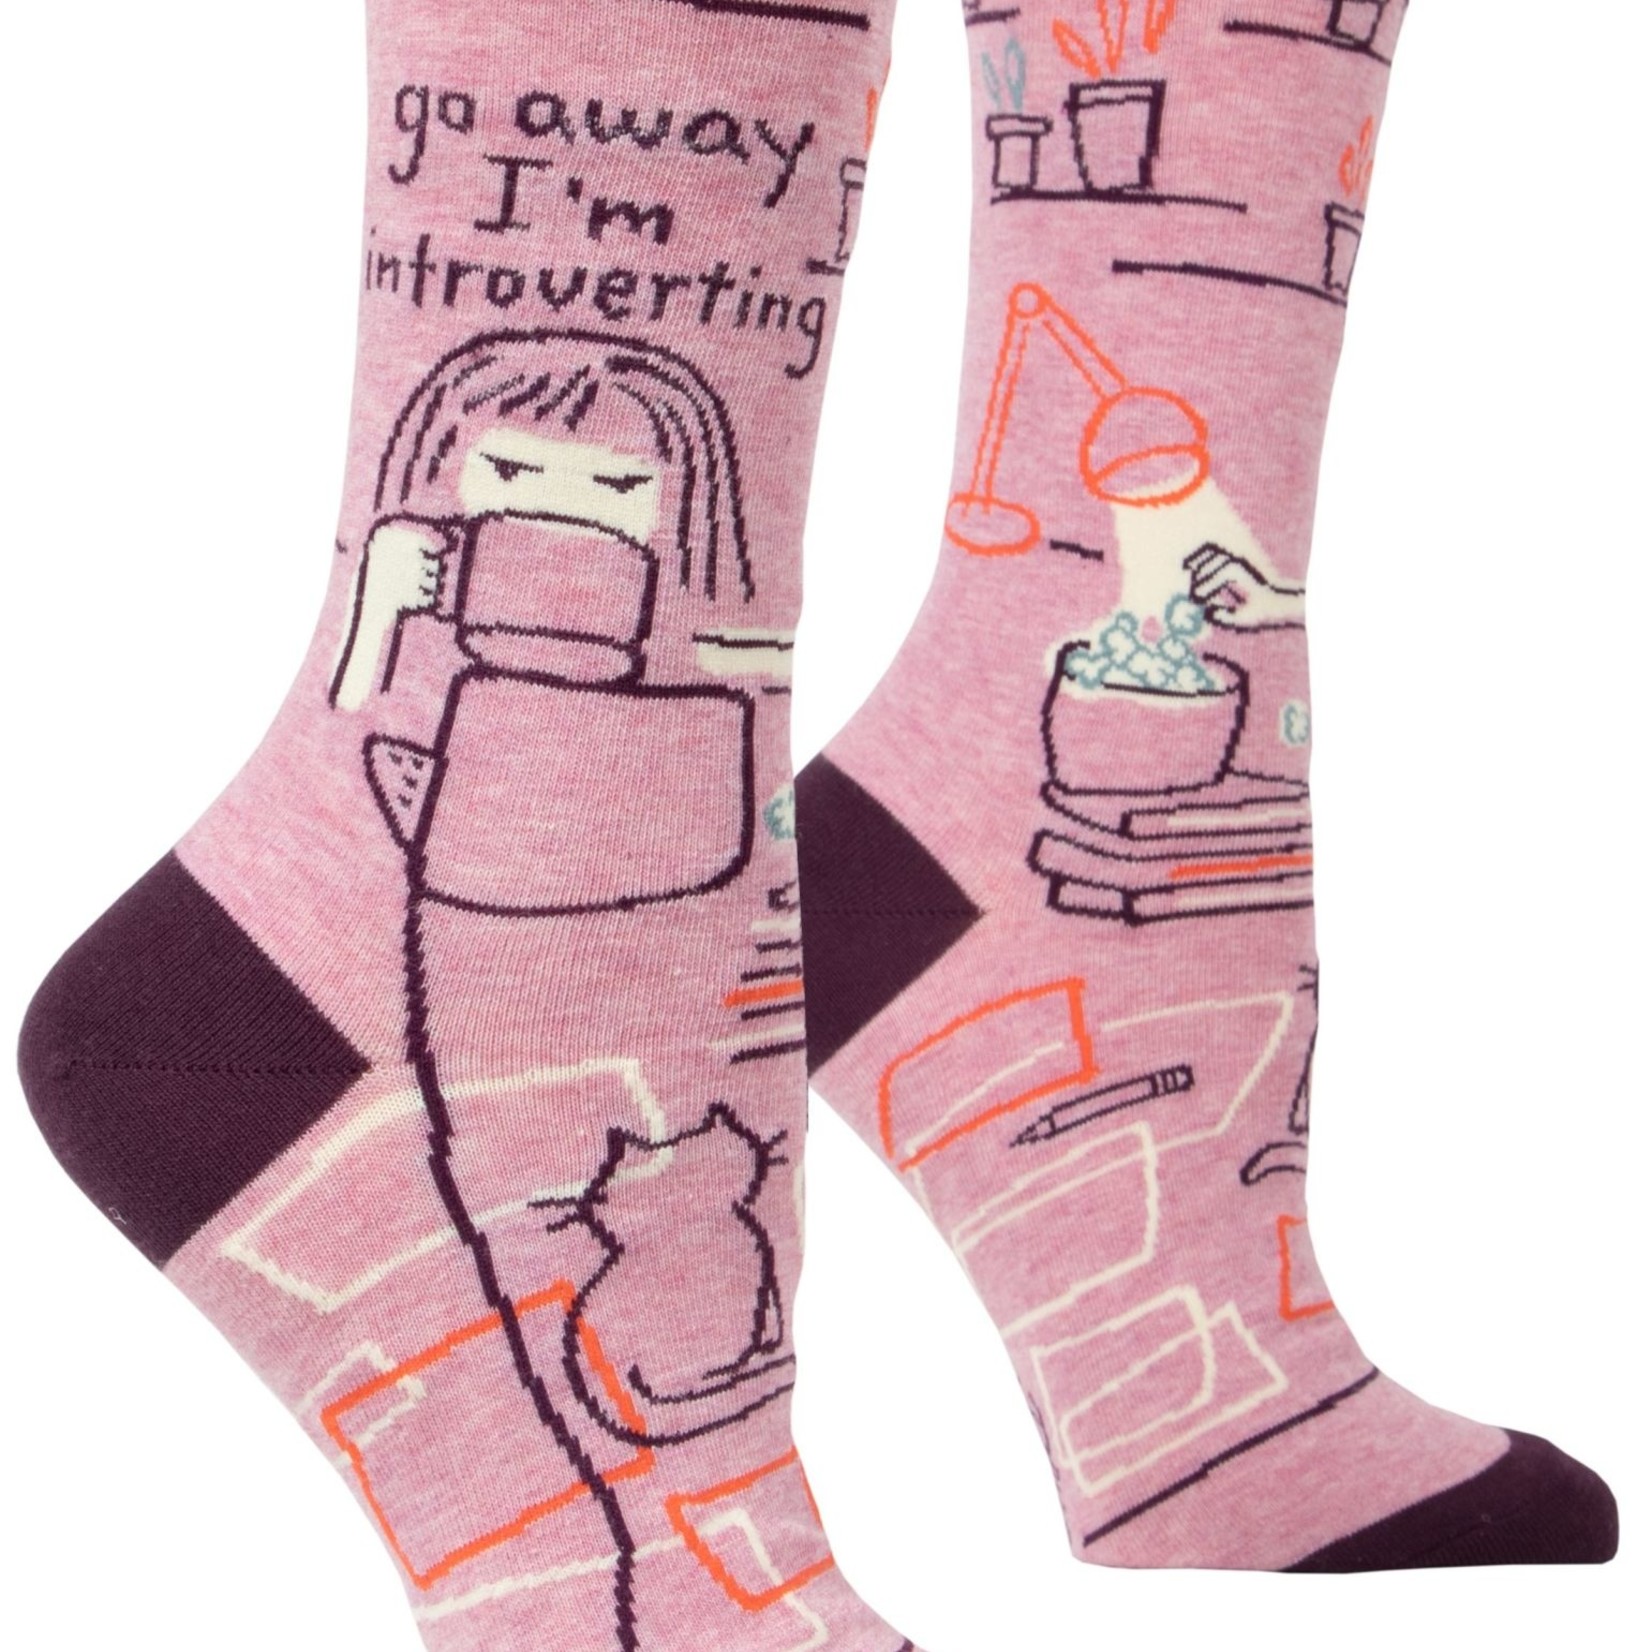 Go Away Introverting Women’s Crew Socks